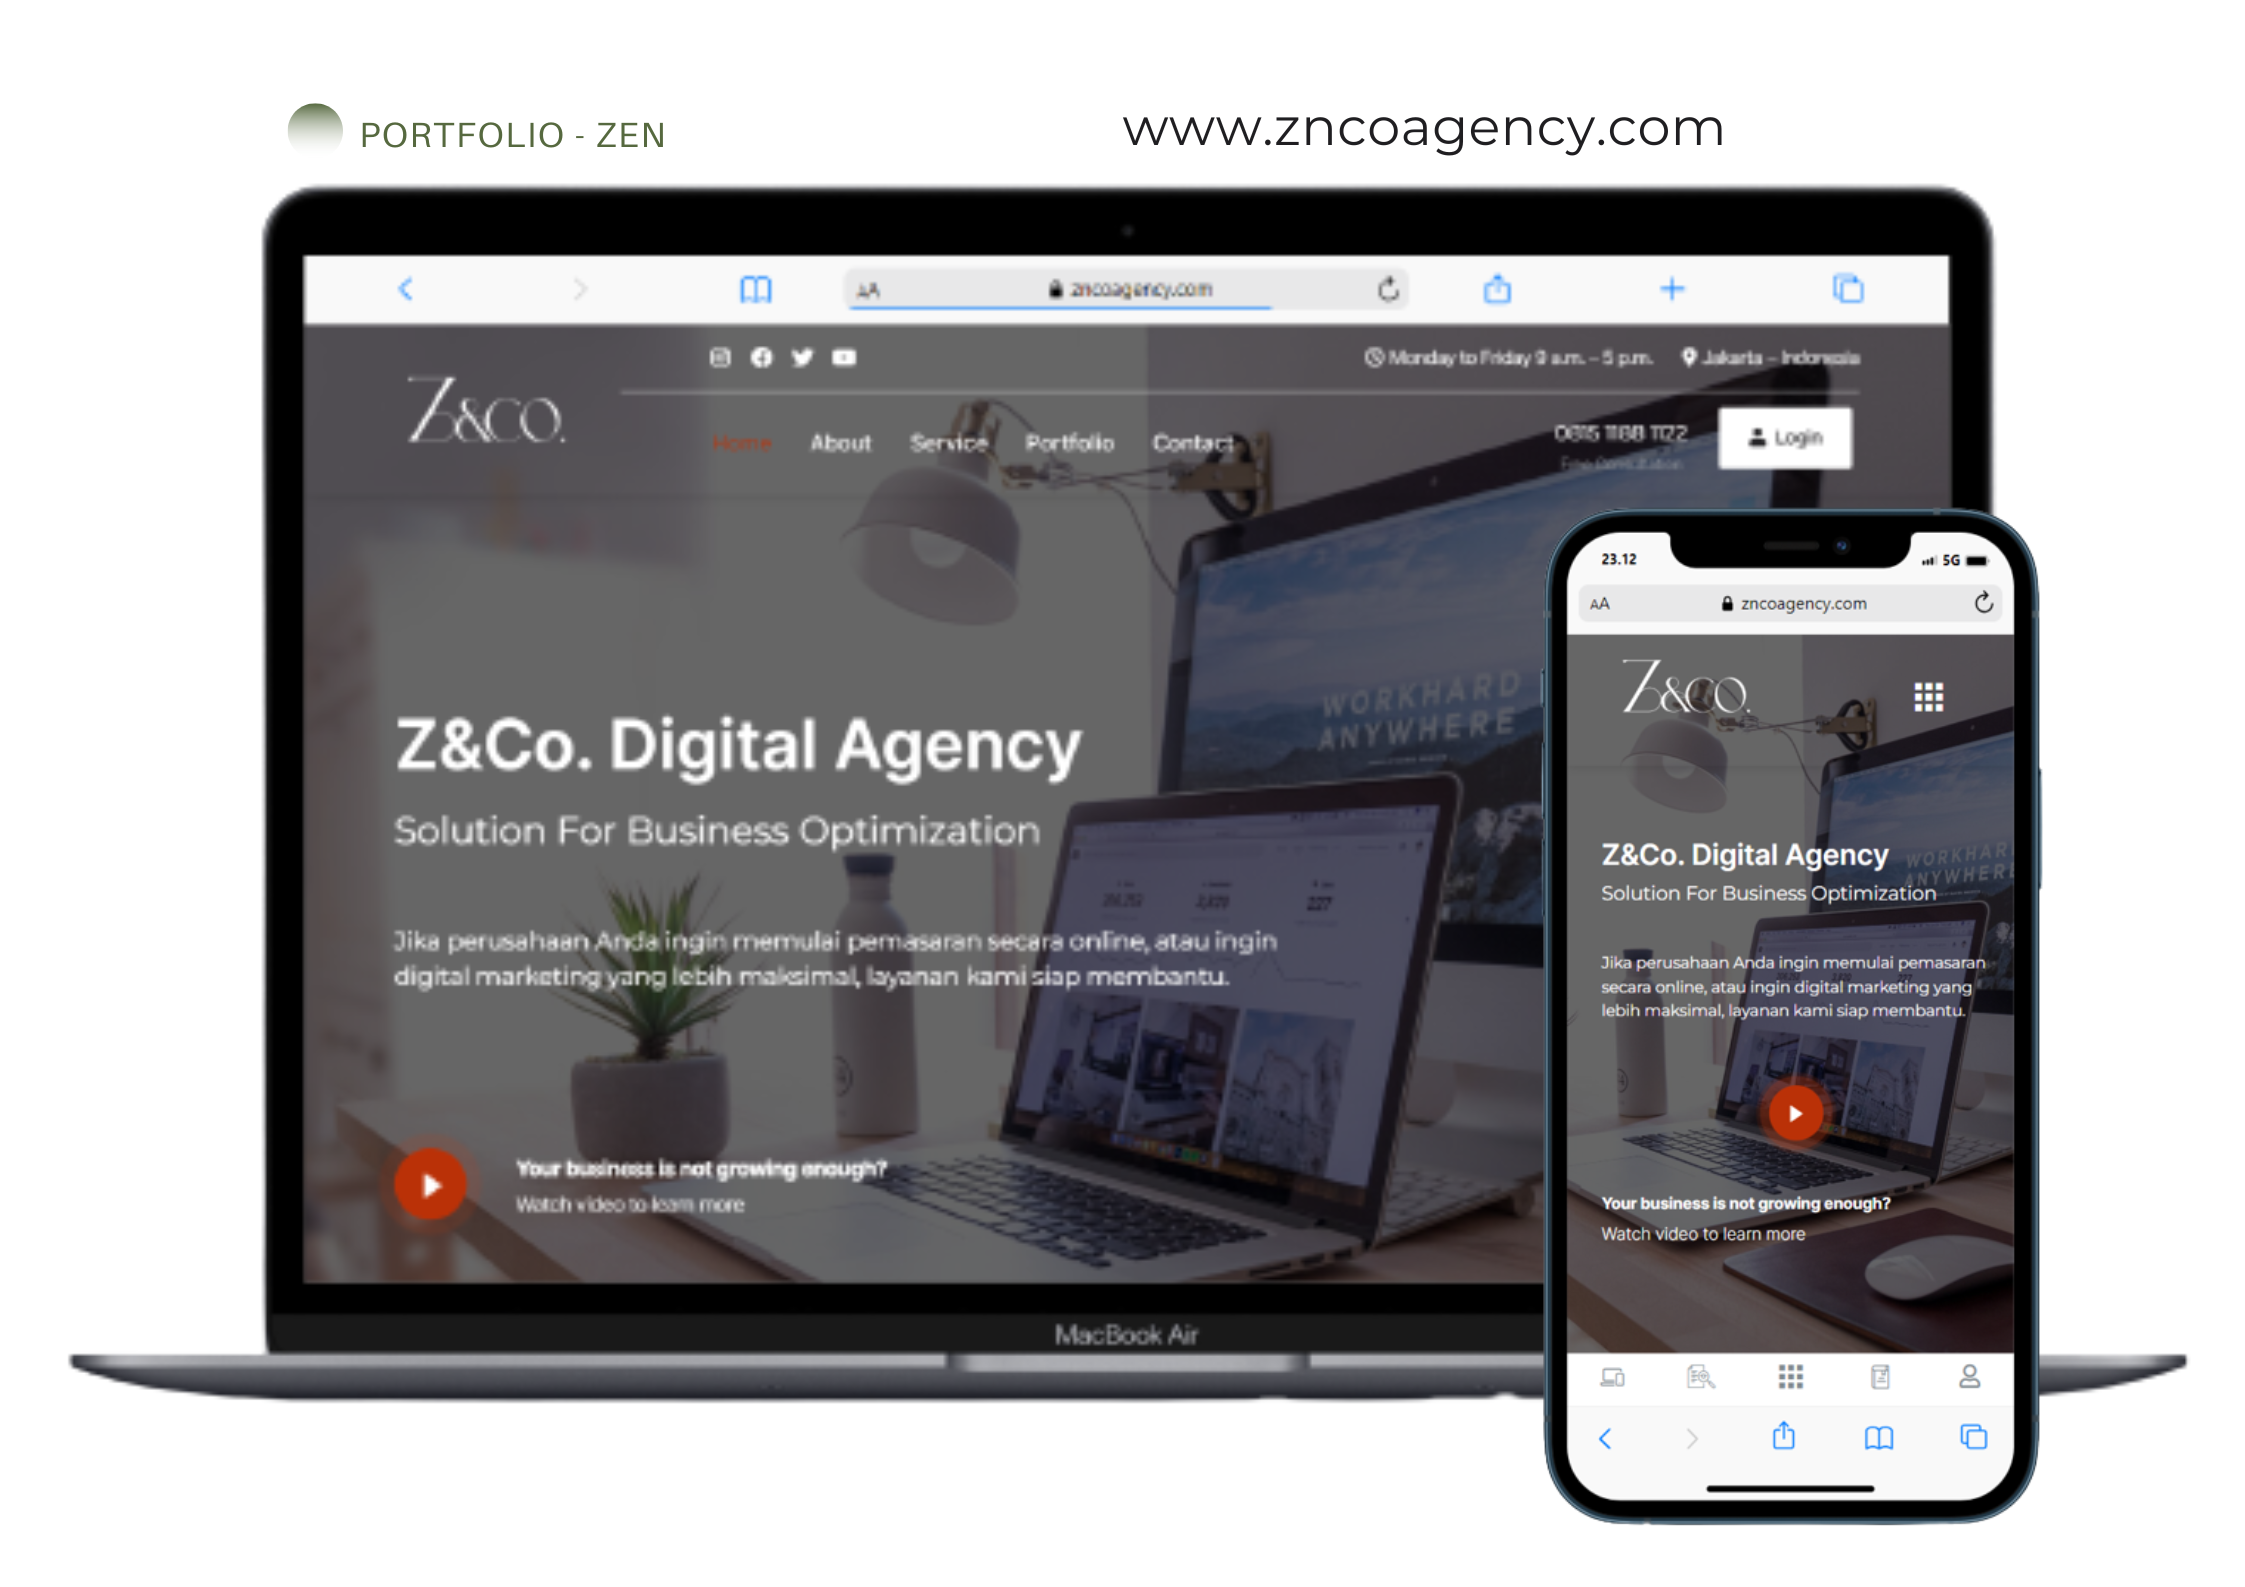 Znco agency